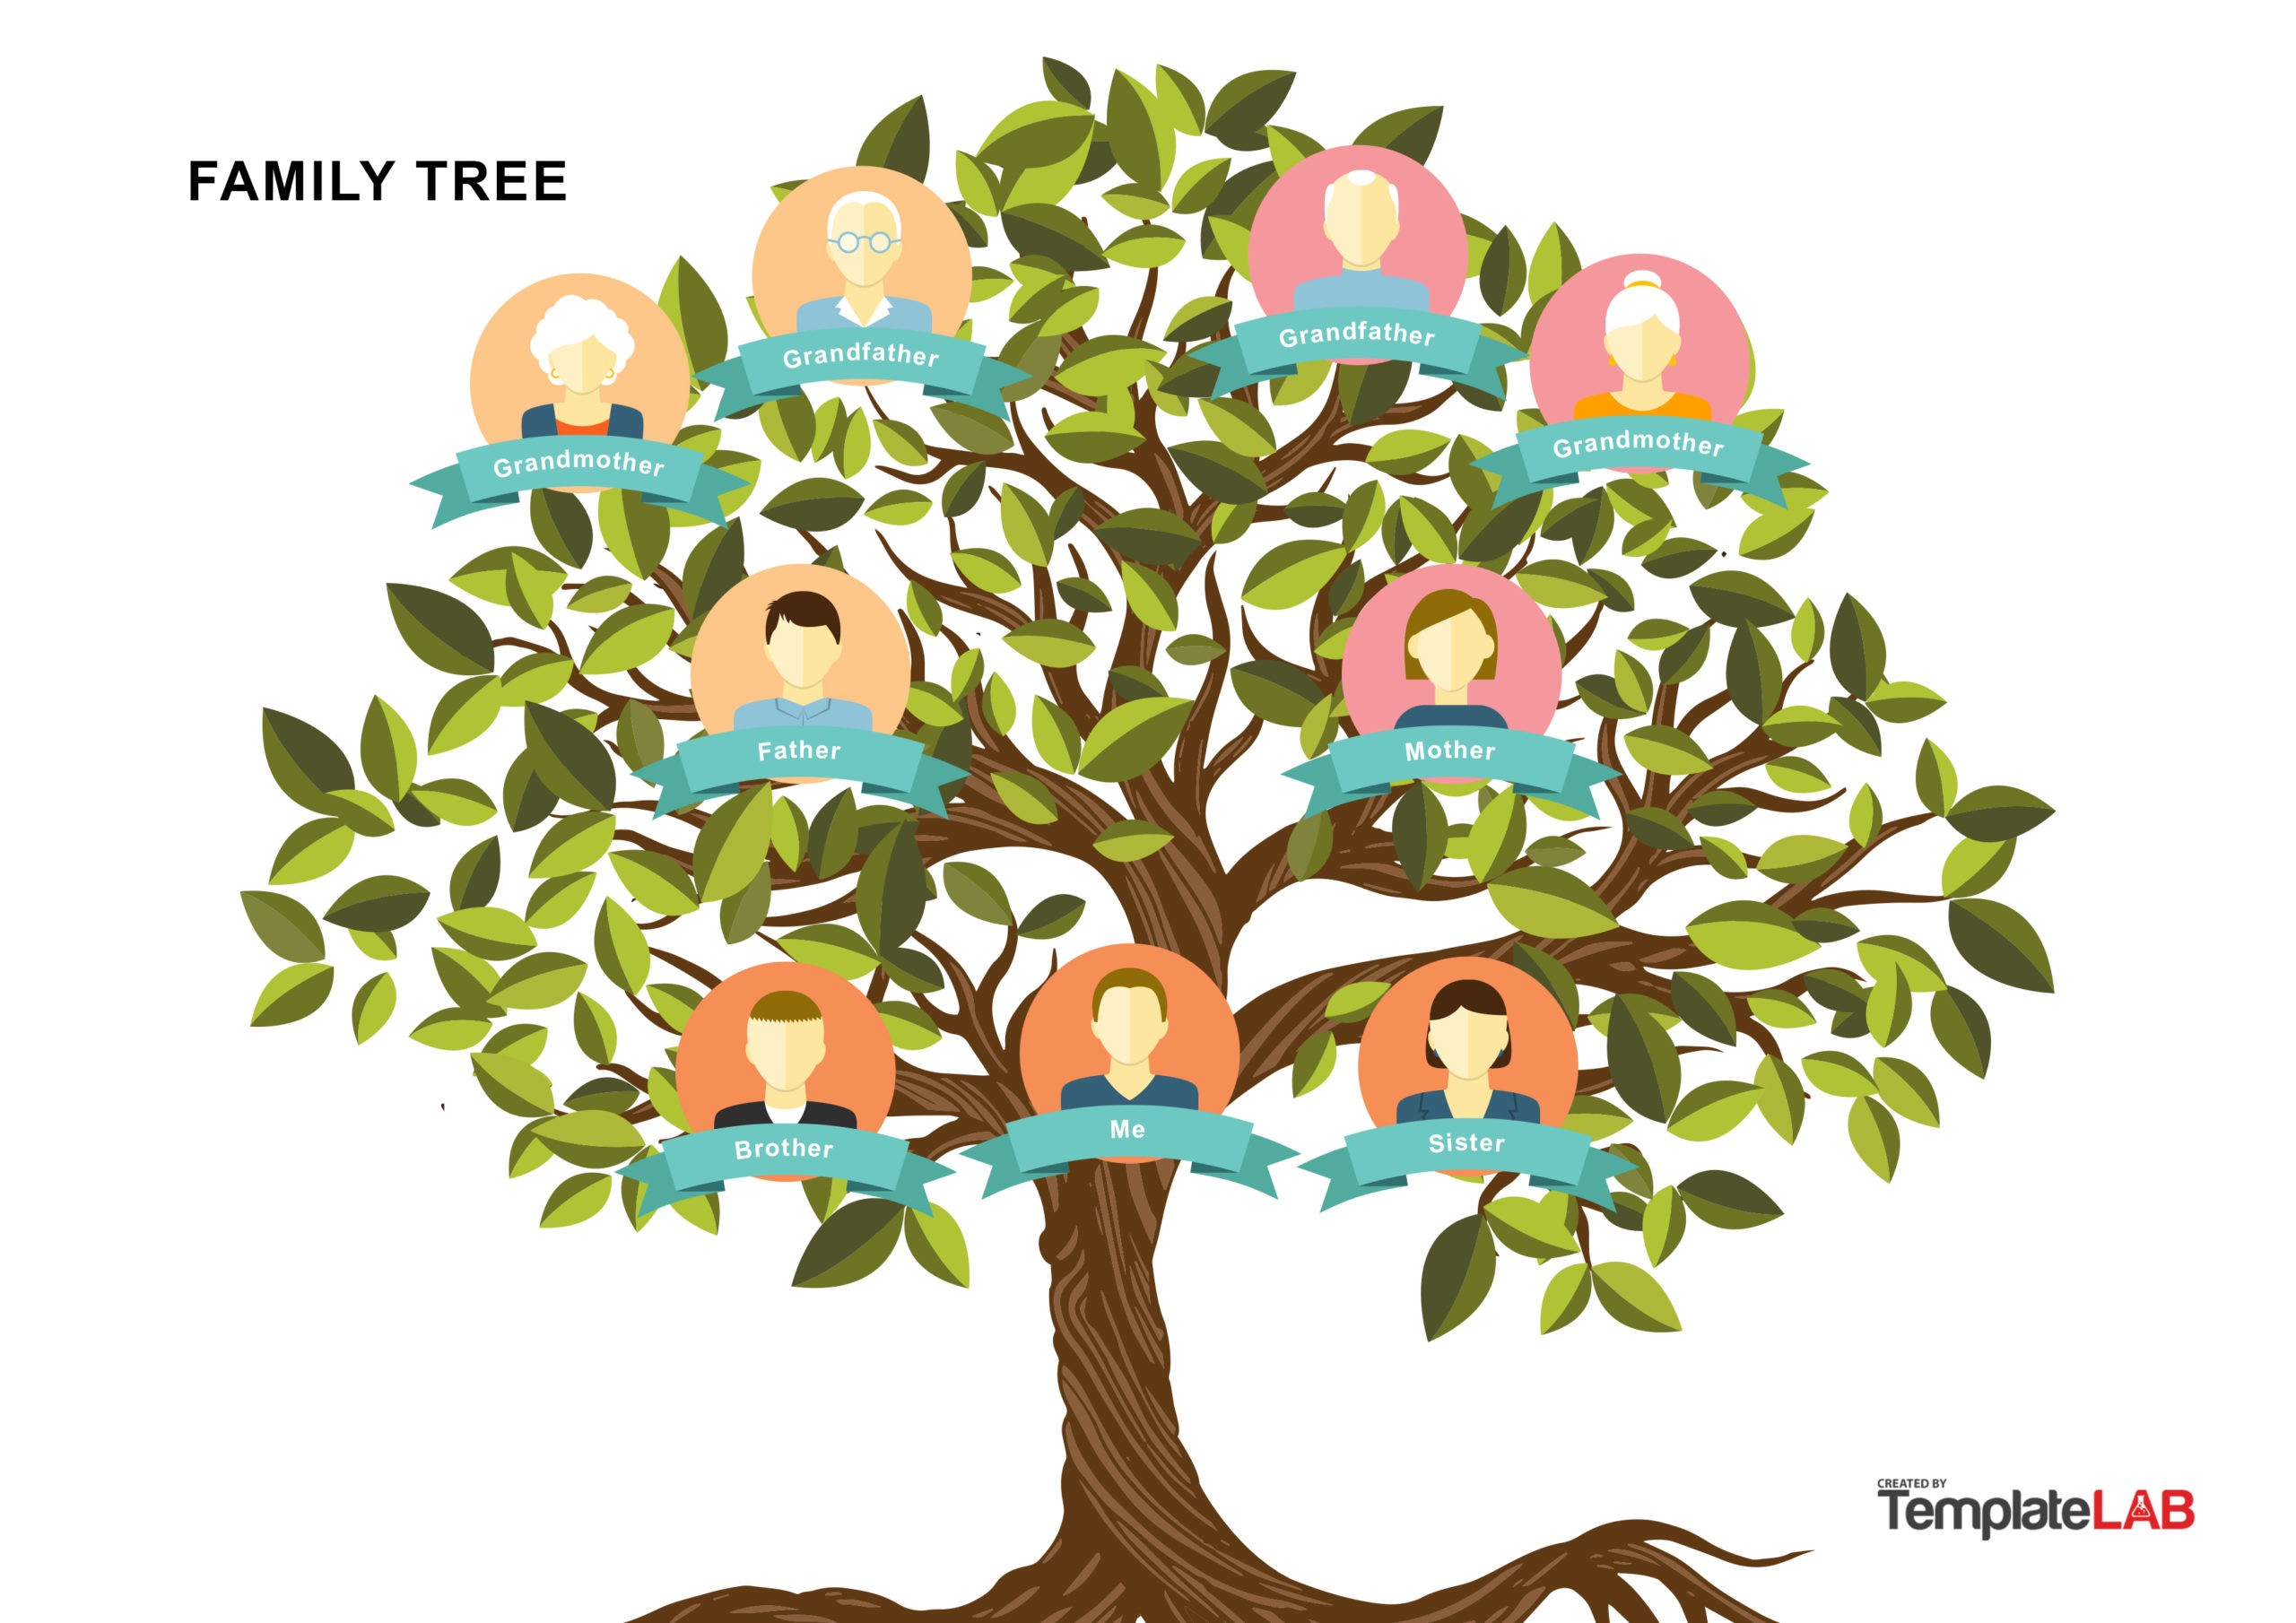 Free Family Tree Template 12 - TemplateLab.com